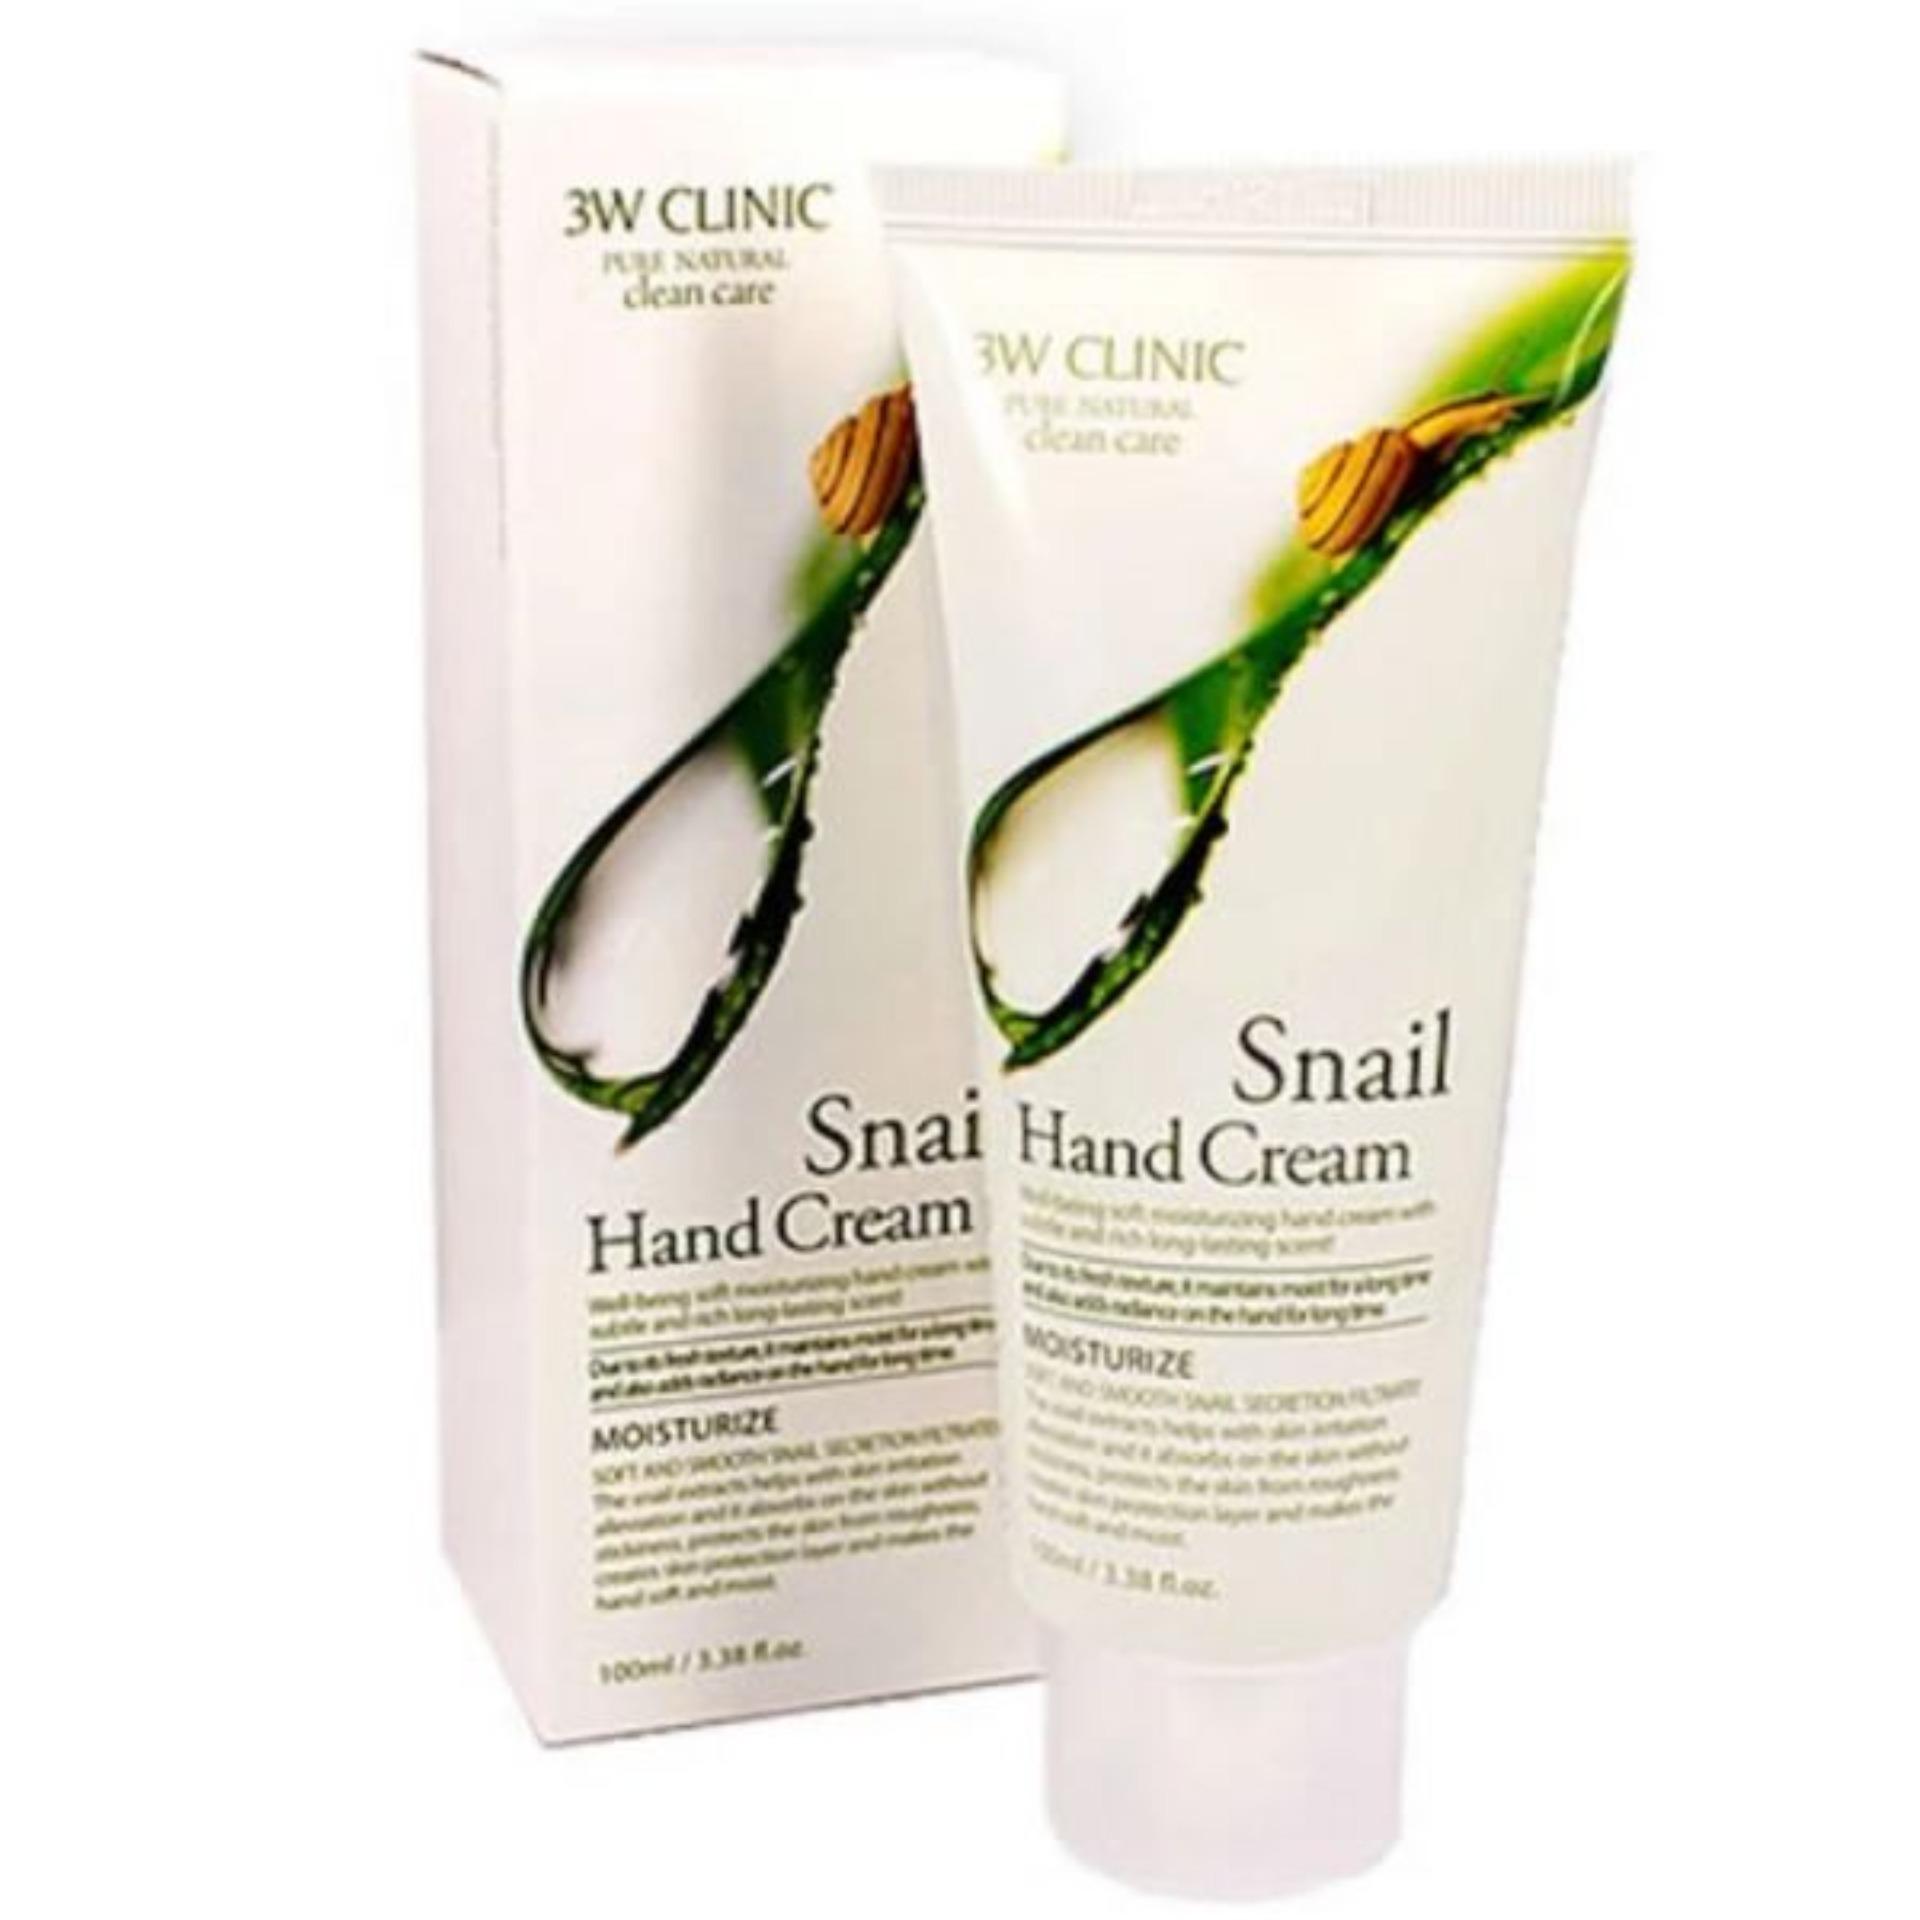 Kem dưỡng da tay 3W Clinic Snail Hand Cream 100ml - Ốc Sên